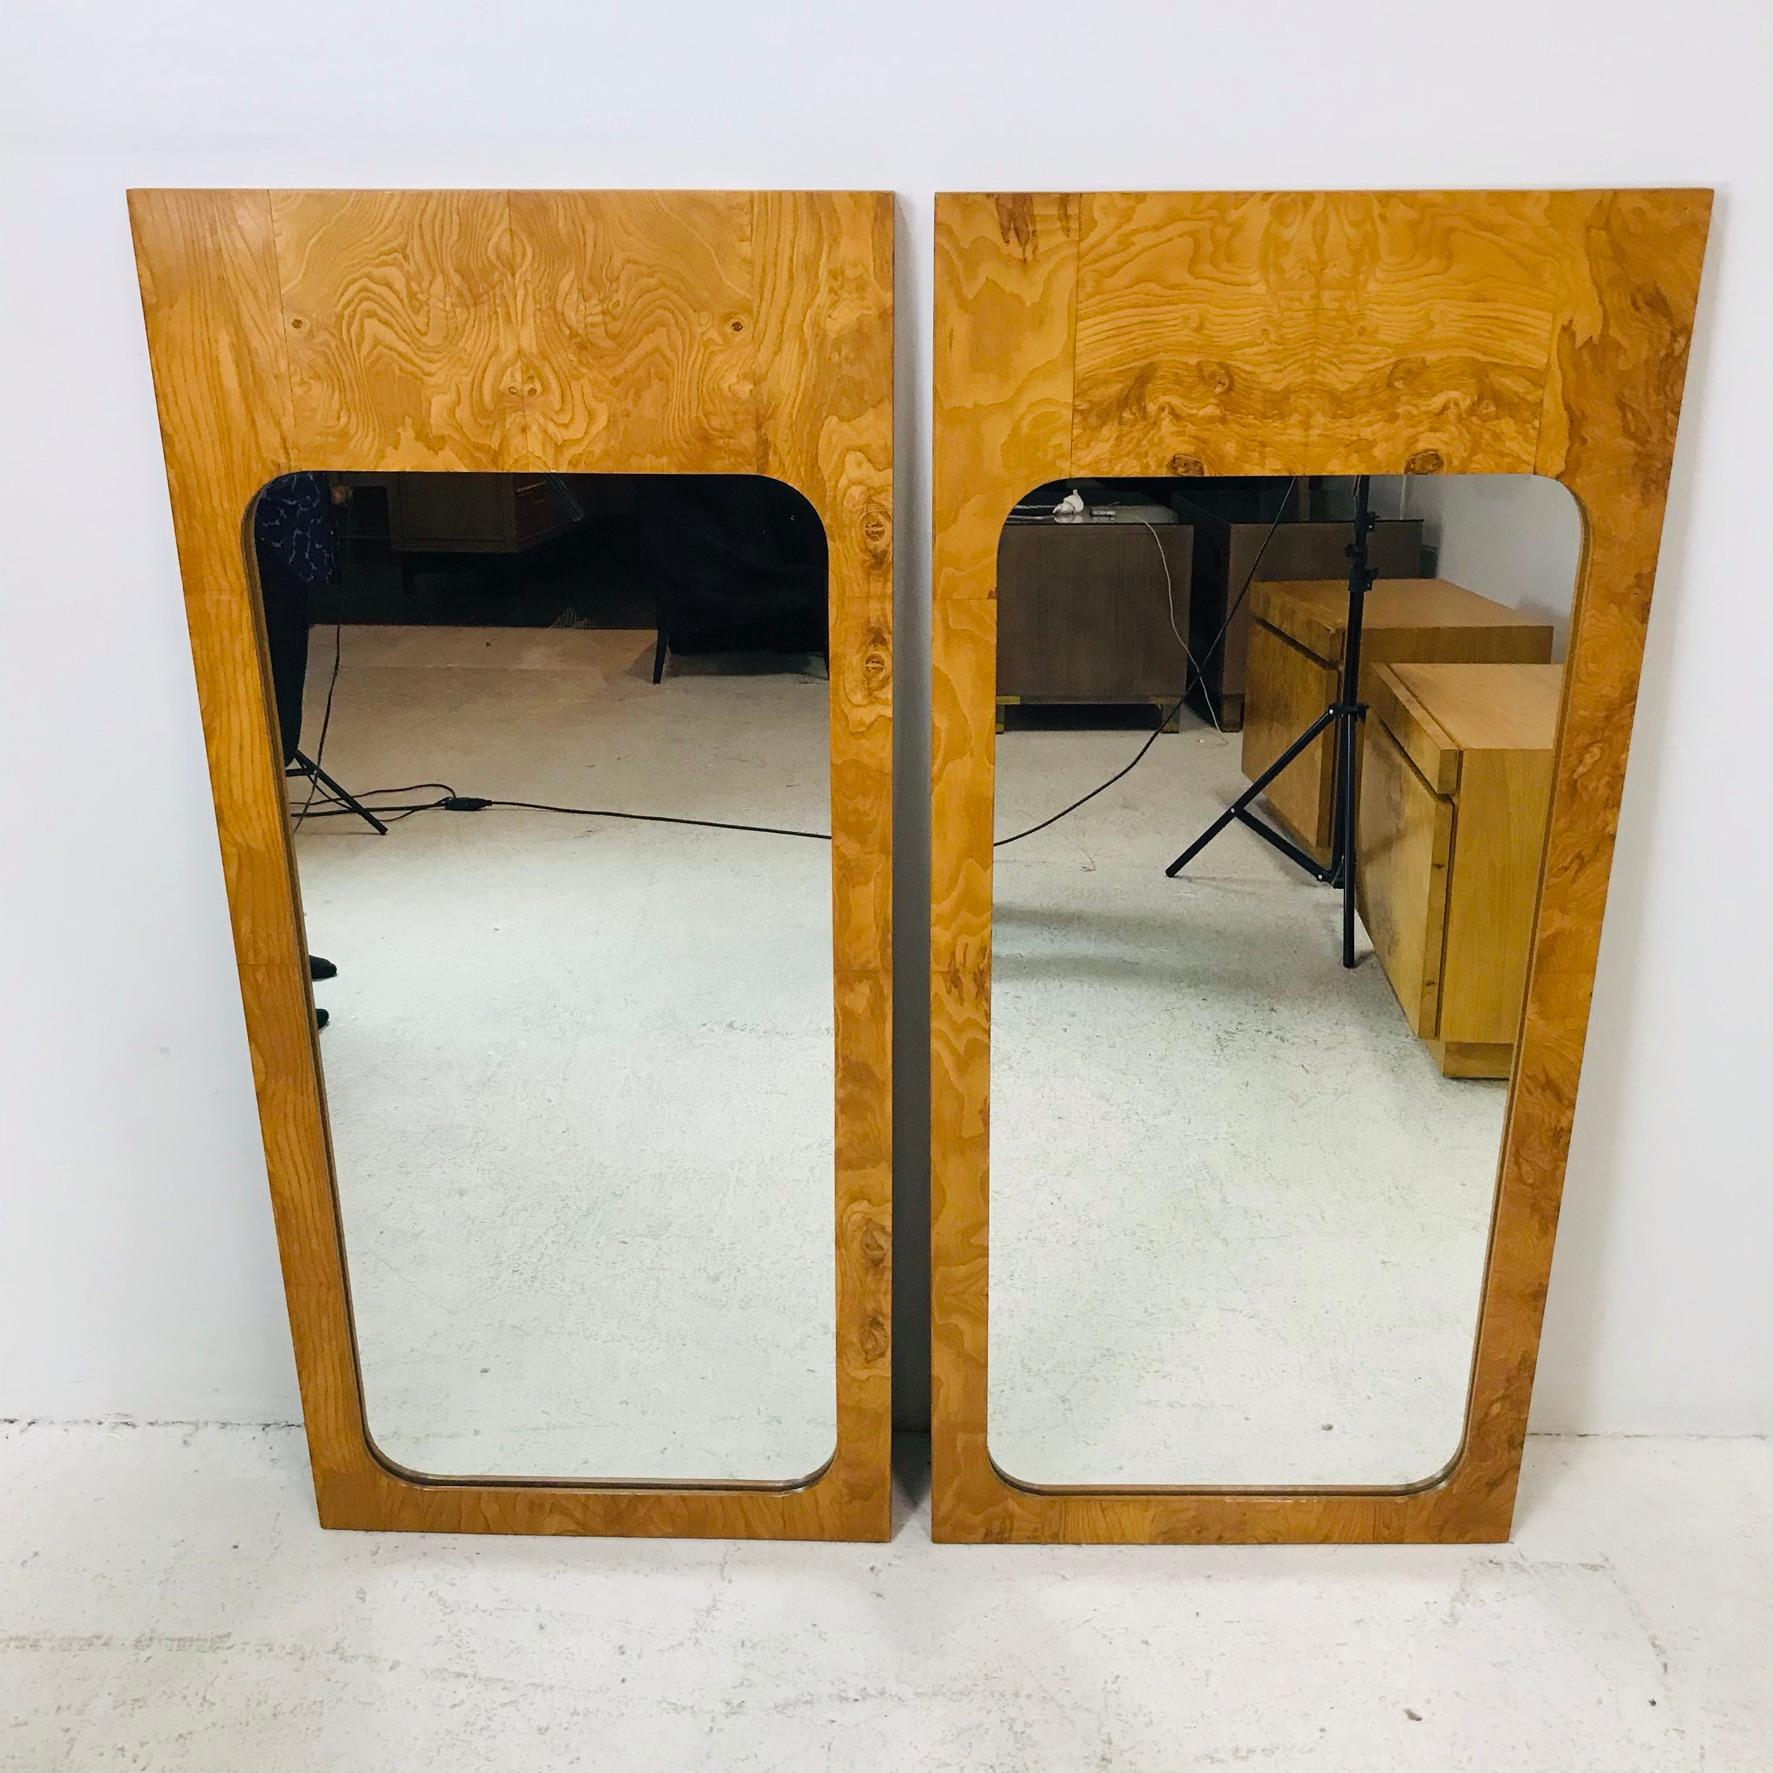 Pair of vintage Lane mid-century burl wood rectangular mirrors. Beautiful wood grain, clean modernist lines.